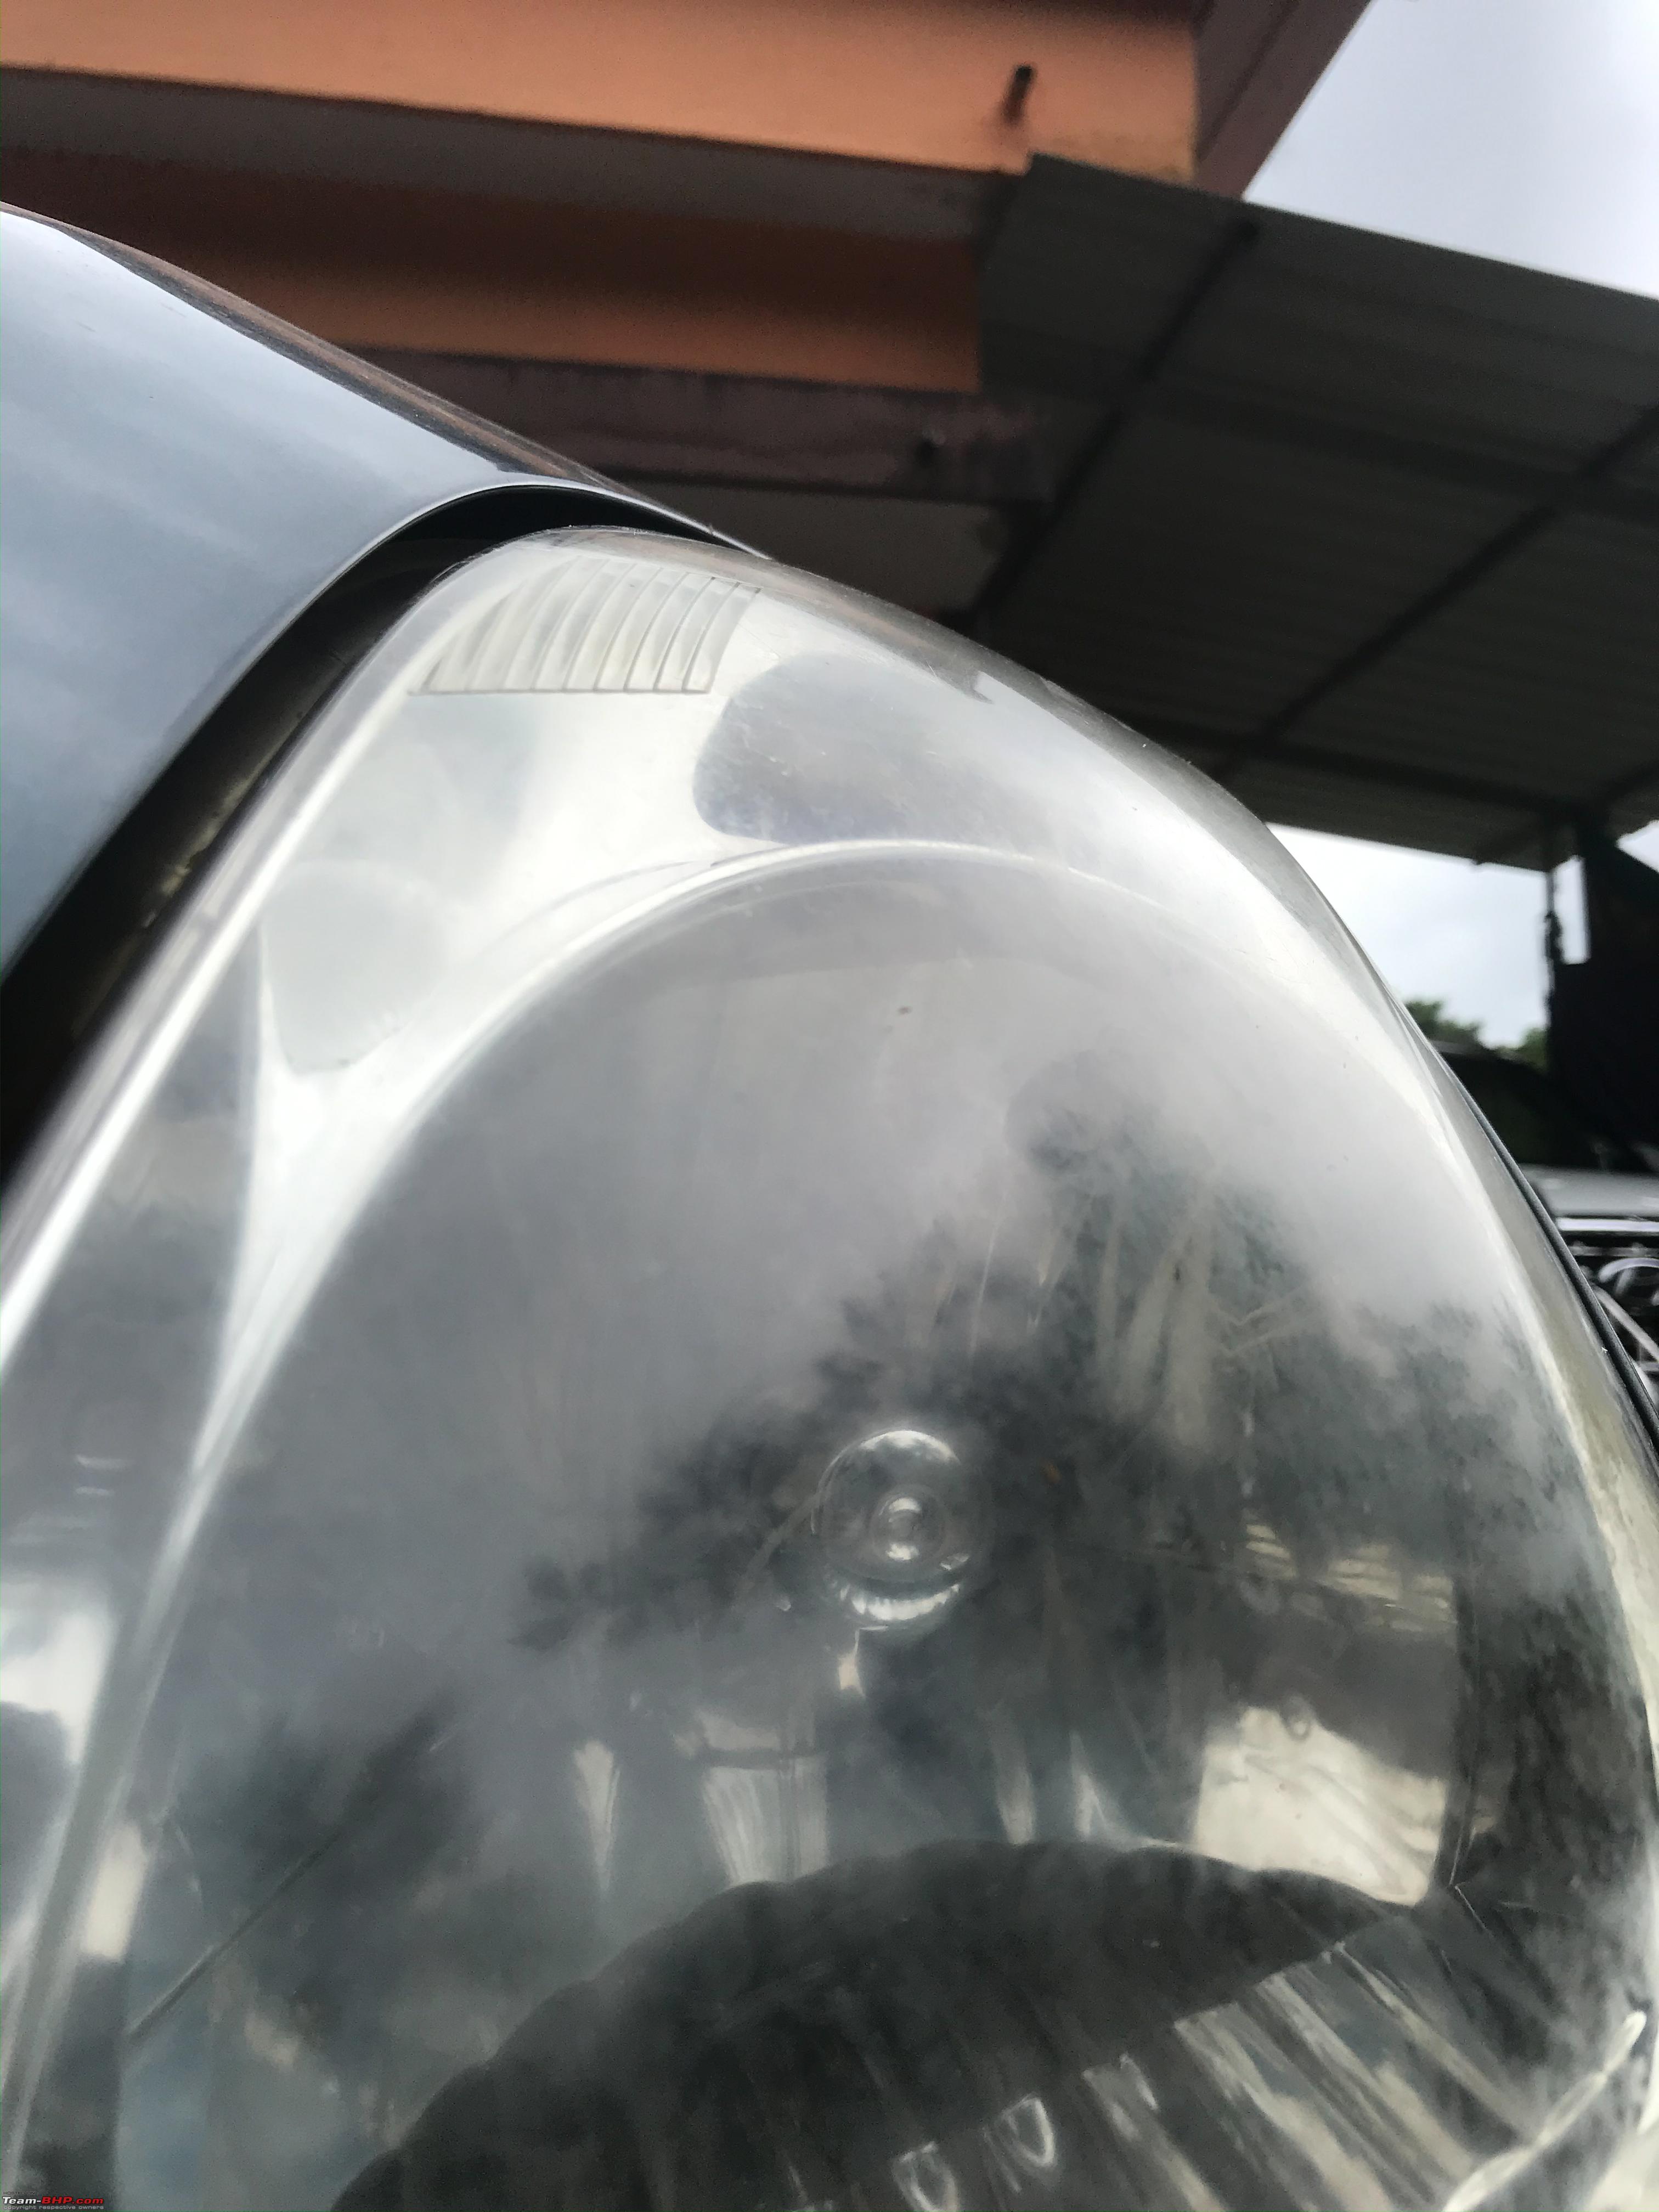 Meguiar's - Unfortunatelyclear plastic headlights can start to